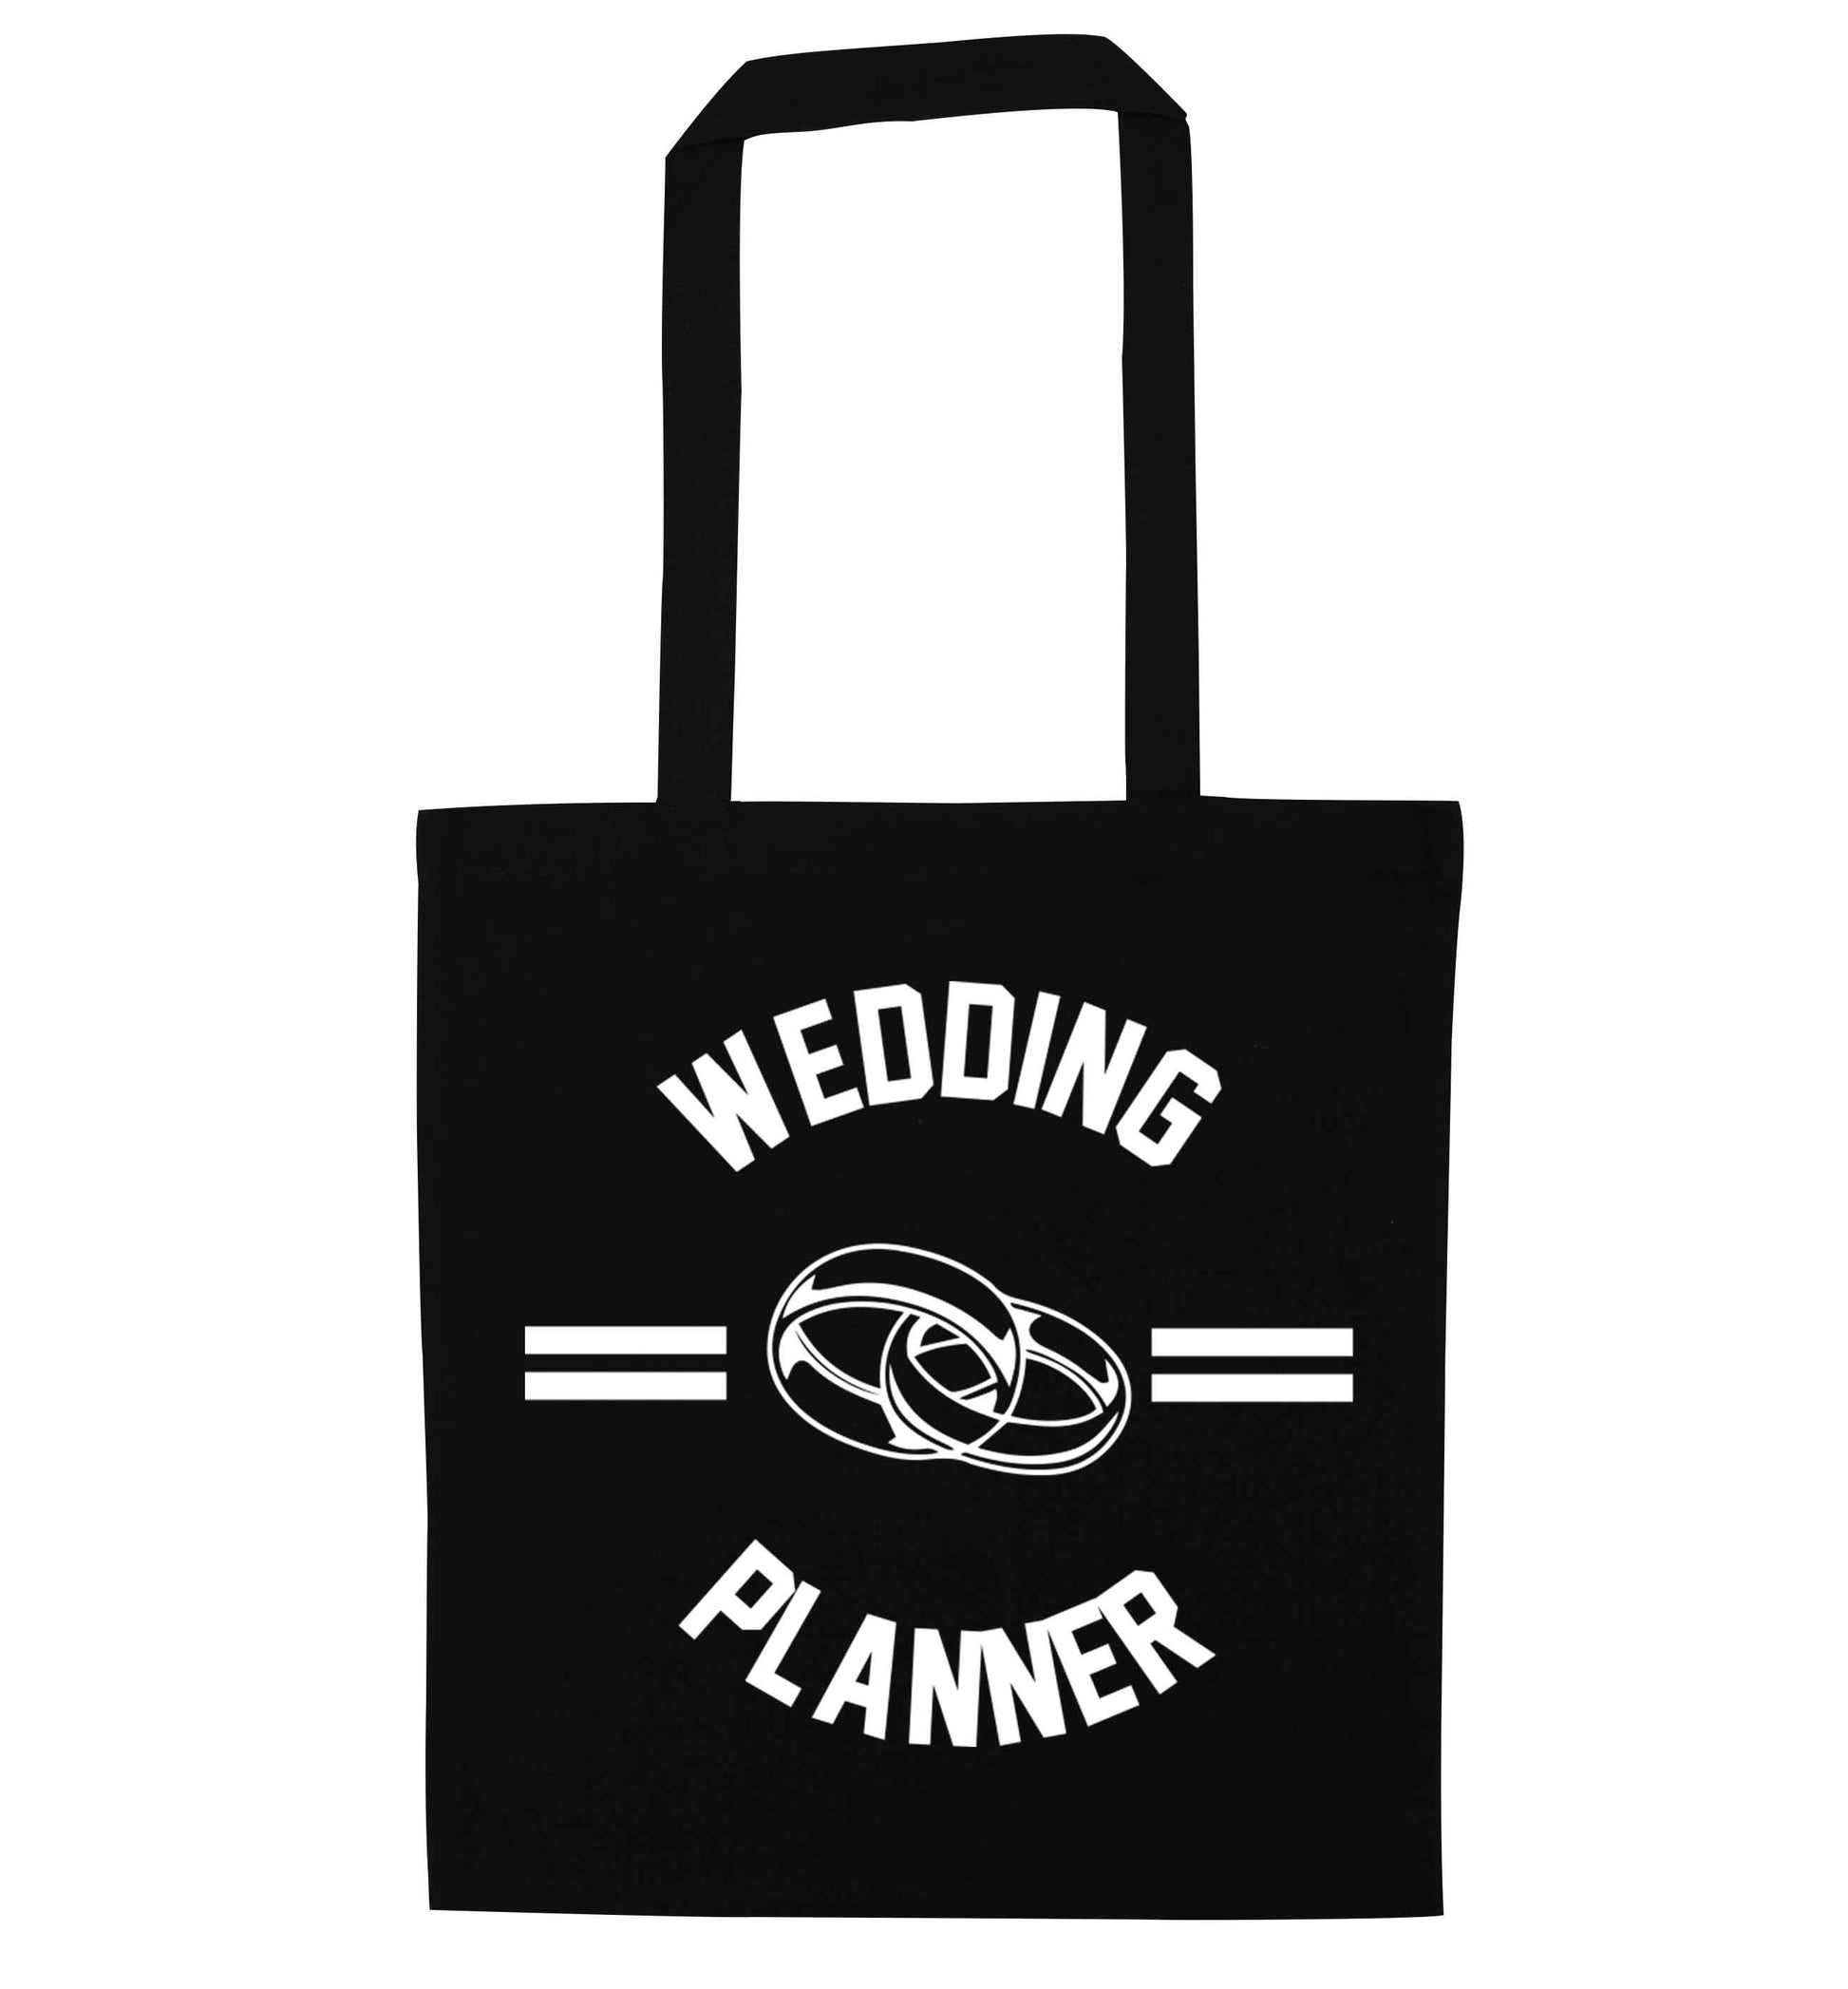 Wedding planner black tote bag